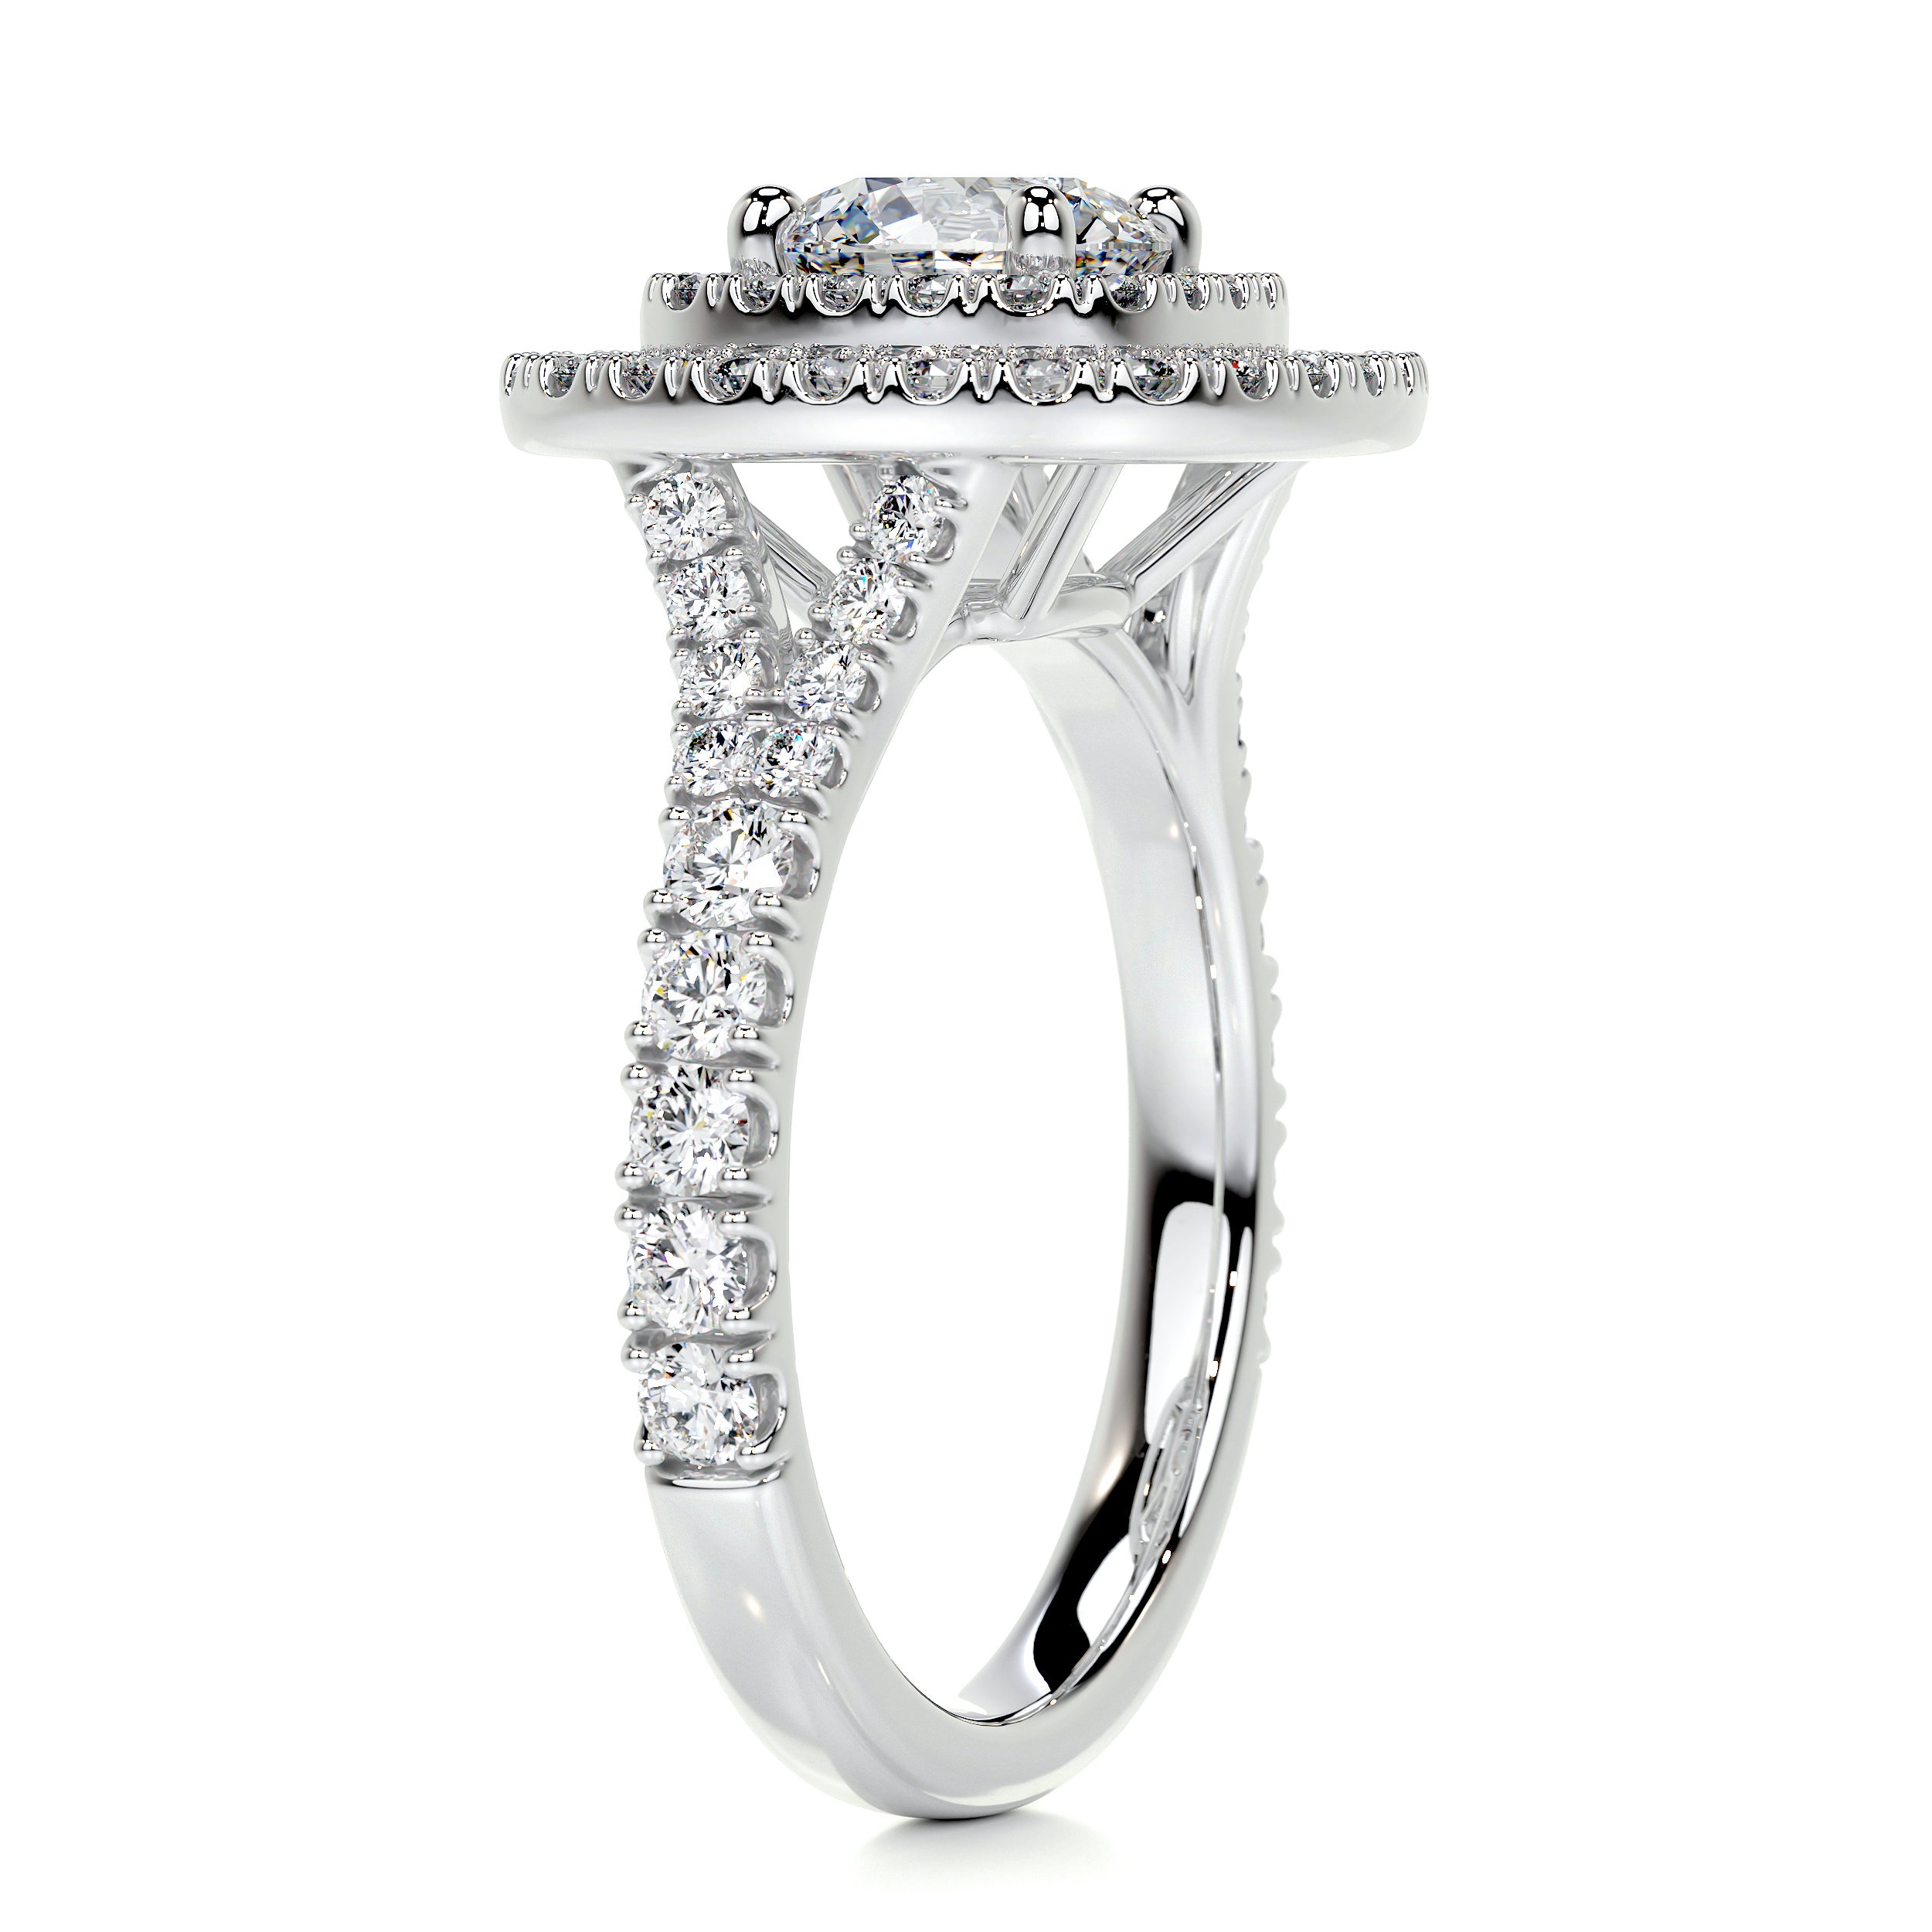 Natalie Diamond Engagement Ring   (2.2 Carat) -14K White Gold